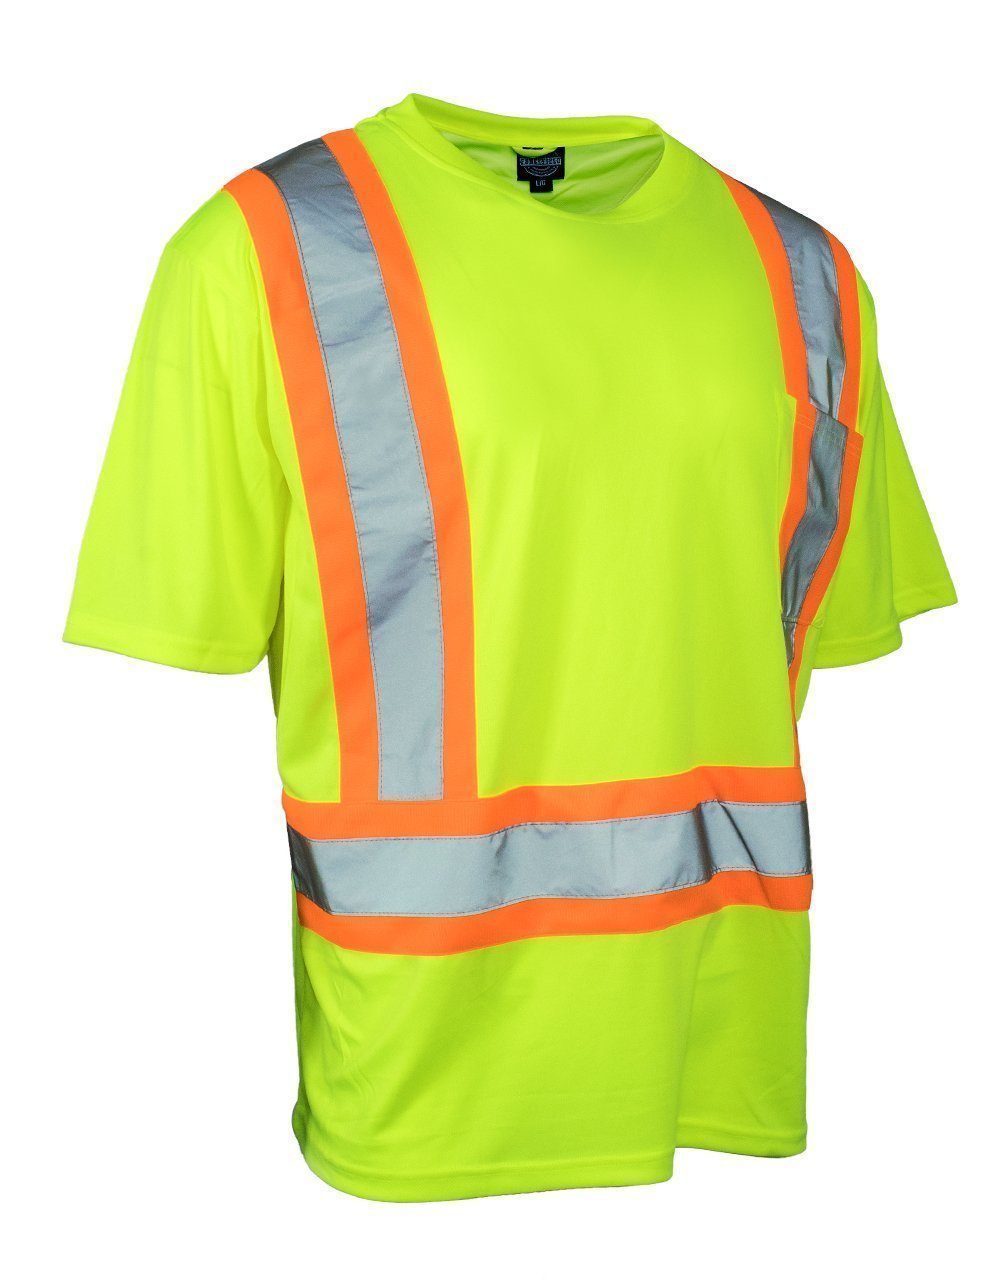 Ultrasoft Hi Vis Crew Neck Short Sleeve Safety Tee Shirt with Chest Pocket